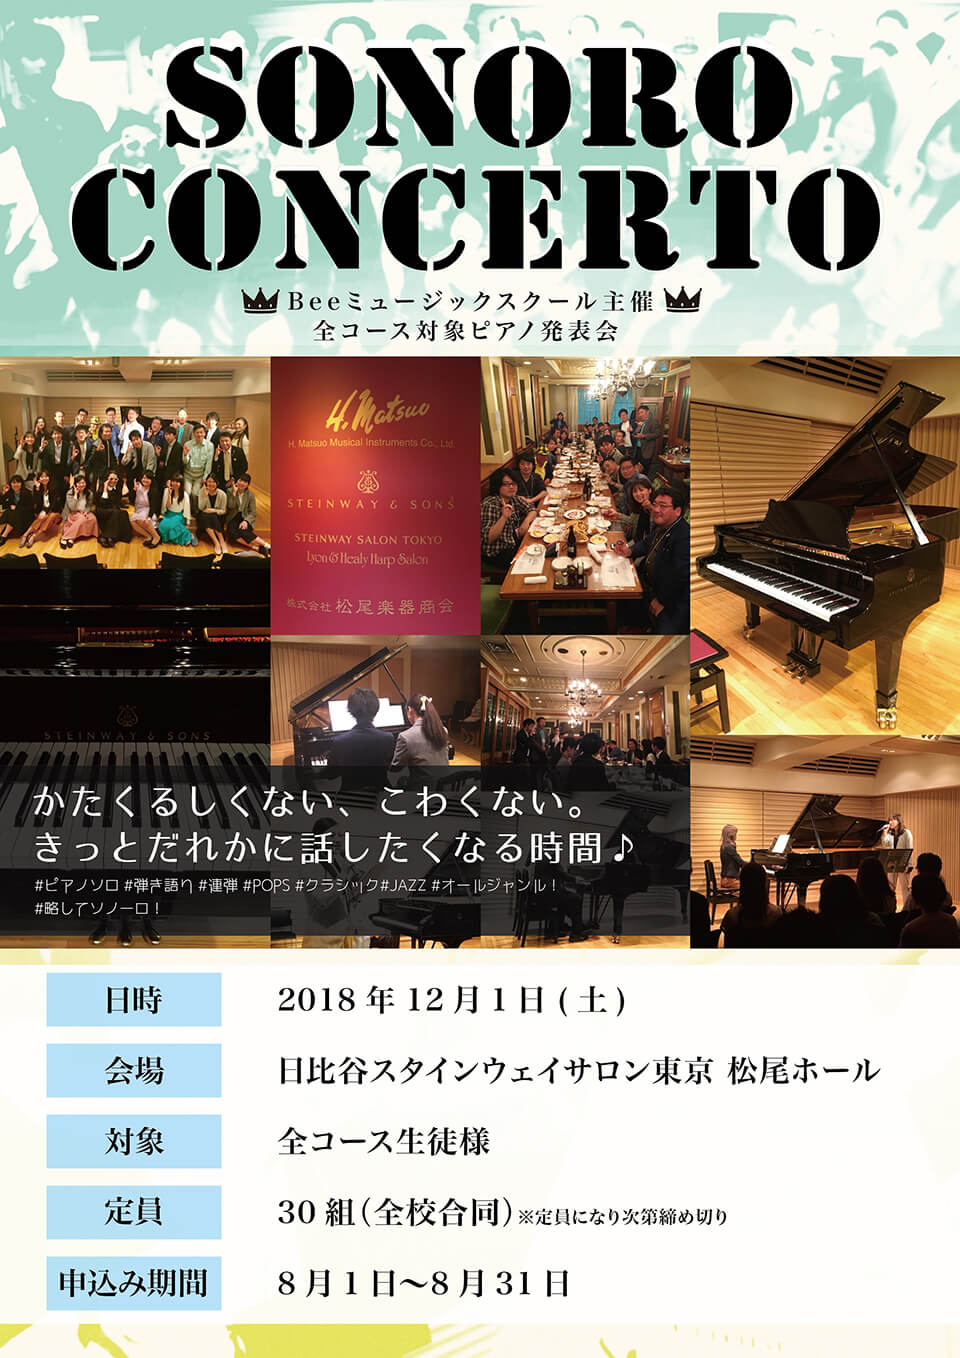 Sonoro concerto（ピアノ発表会）